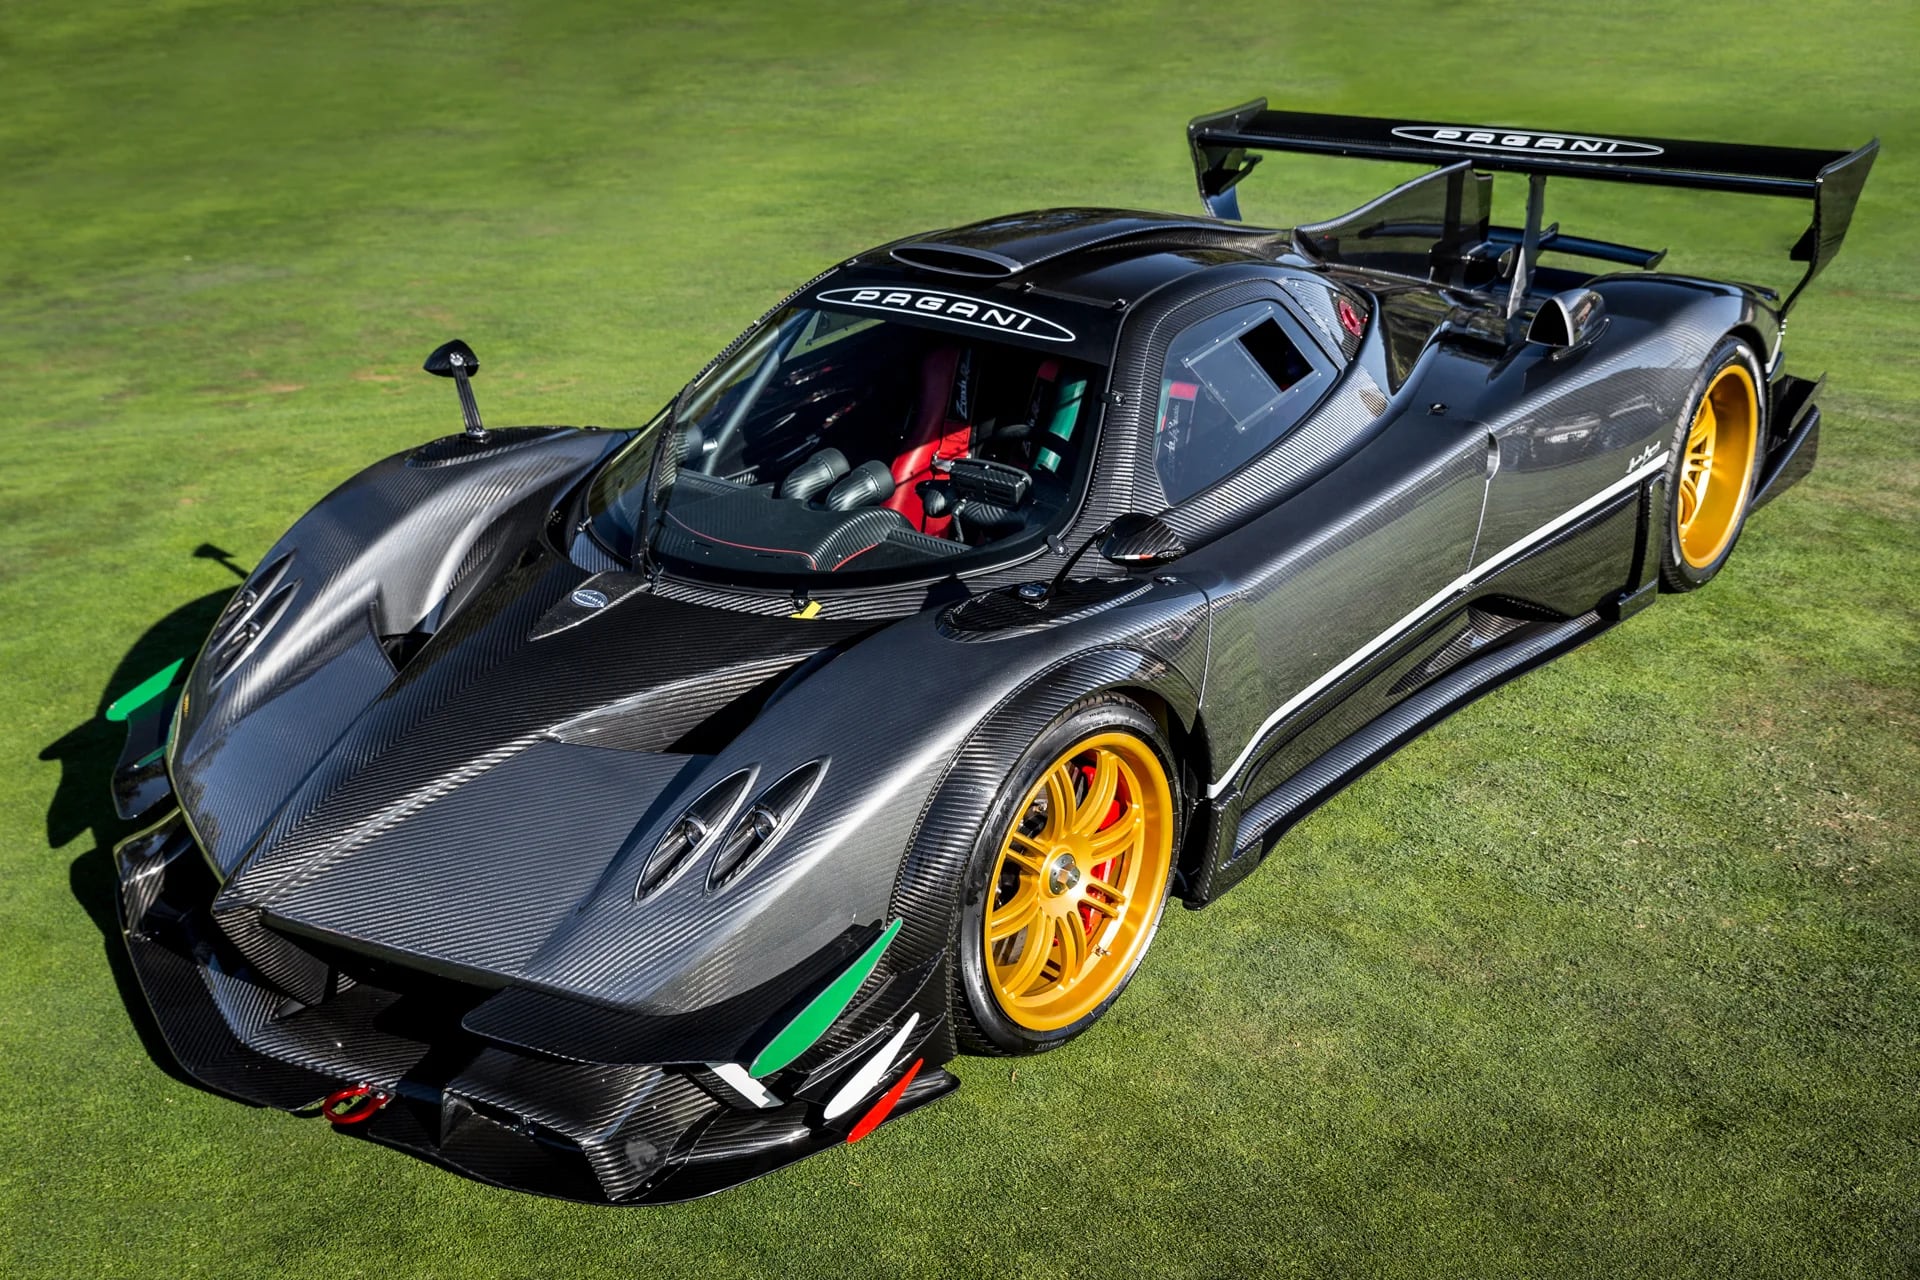 El Black Minion de Pablo Pérez Companc acelera 350 kilómetros por hora gracias a sus 800 caballos de potencia